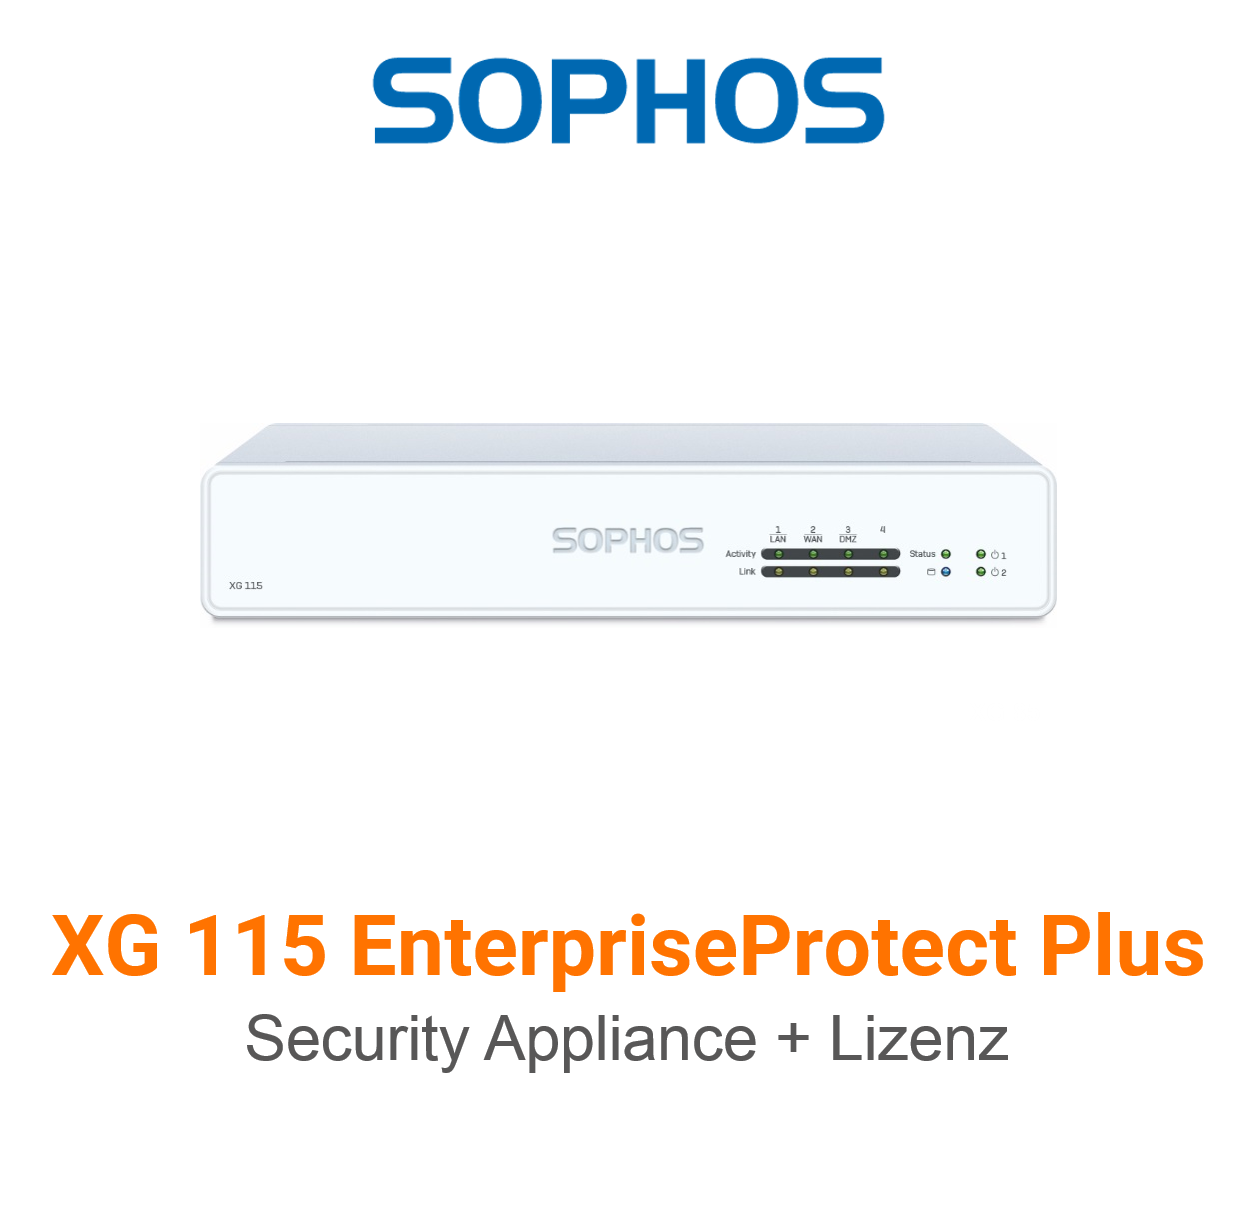 Sophos XG 115 EnterpriseProtect Plus Bundle (End of Sale/Life)